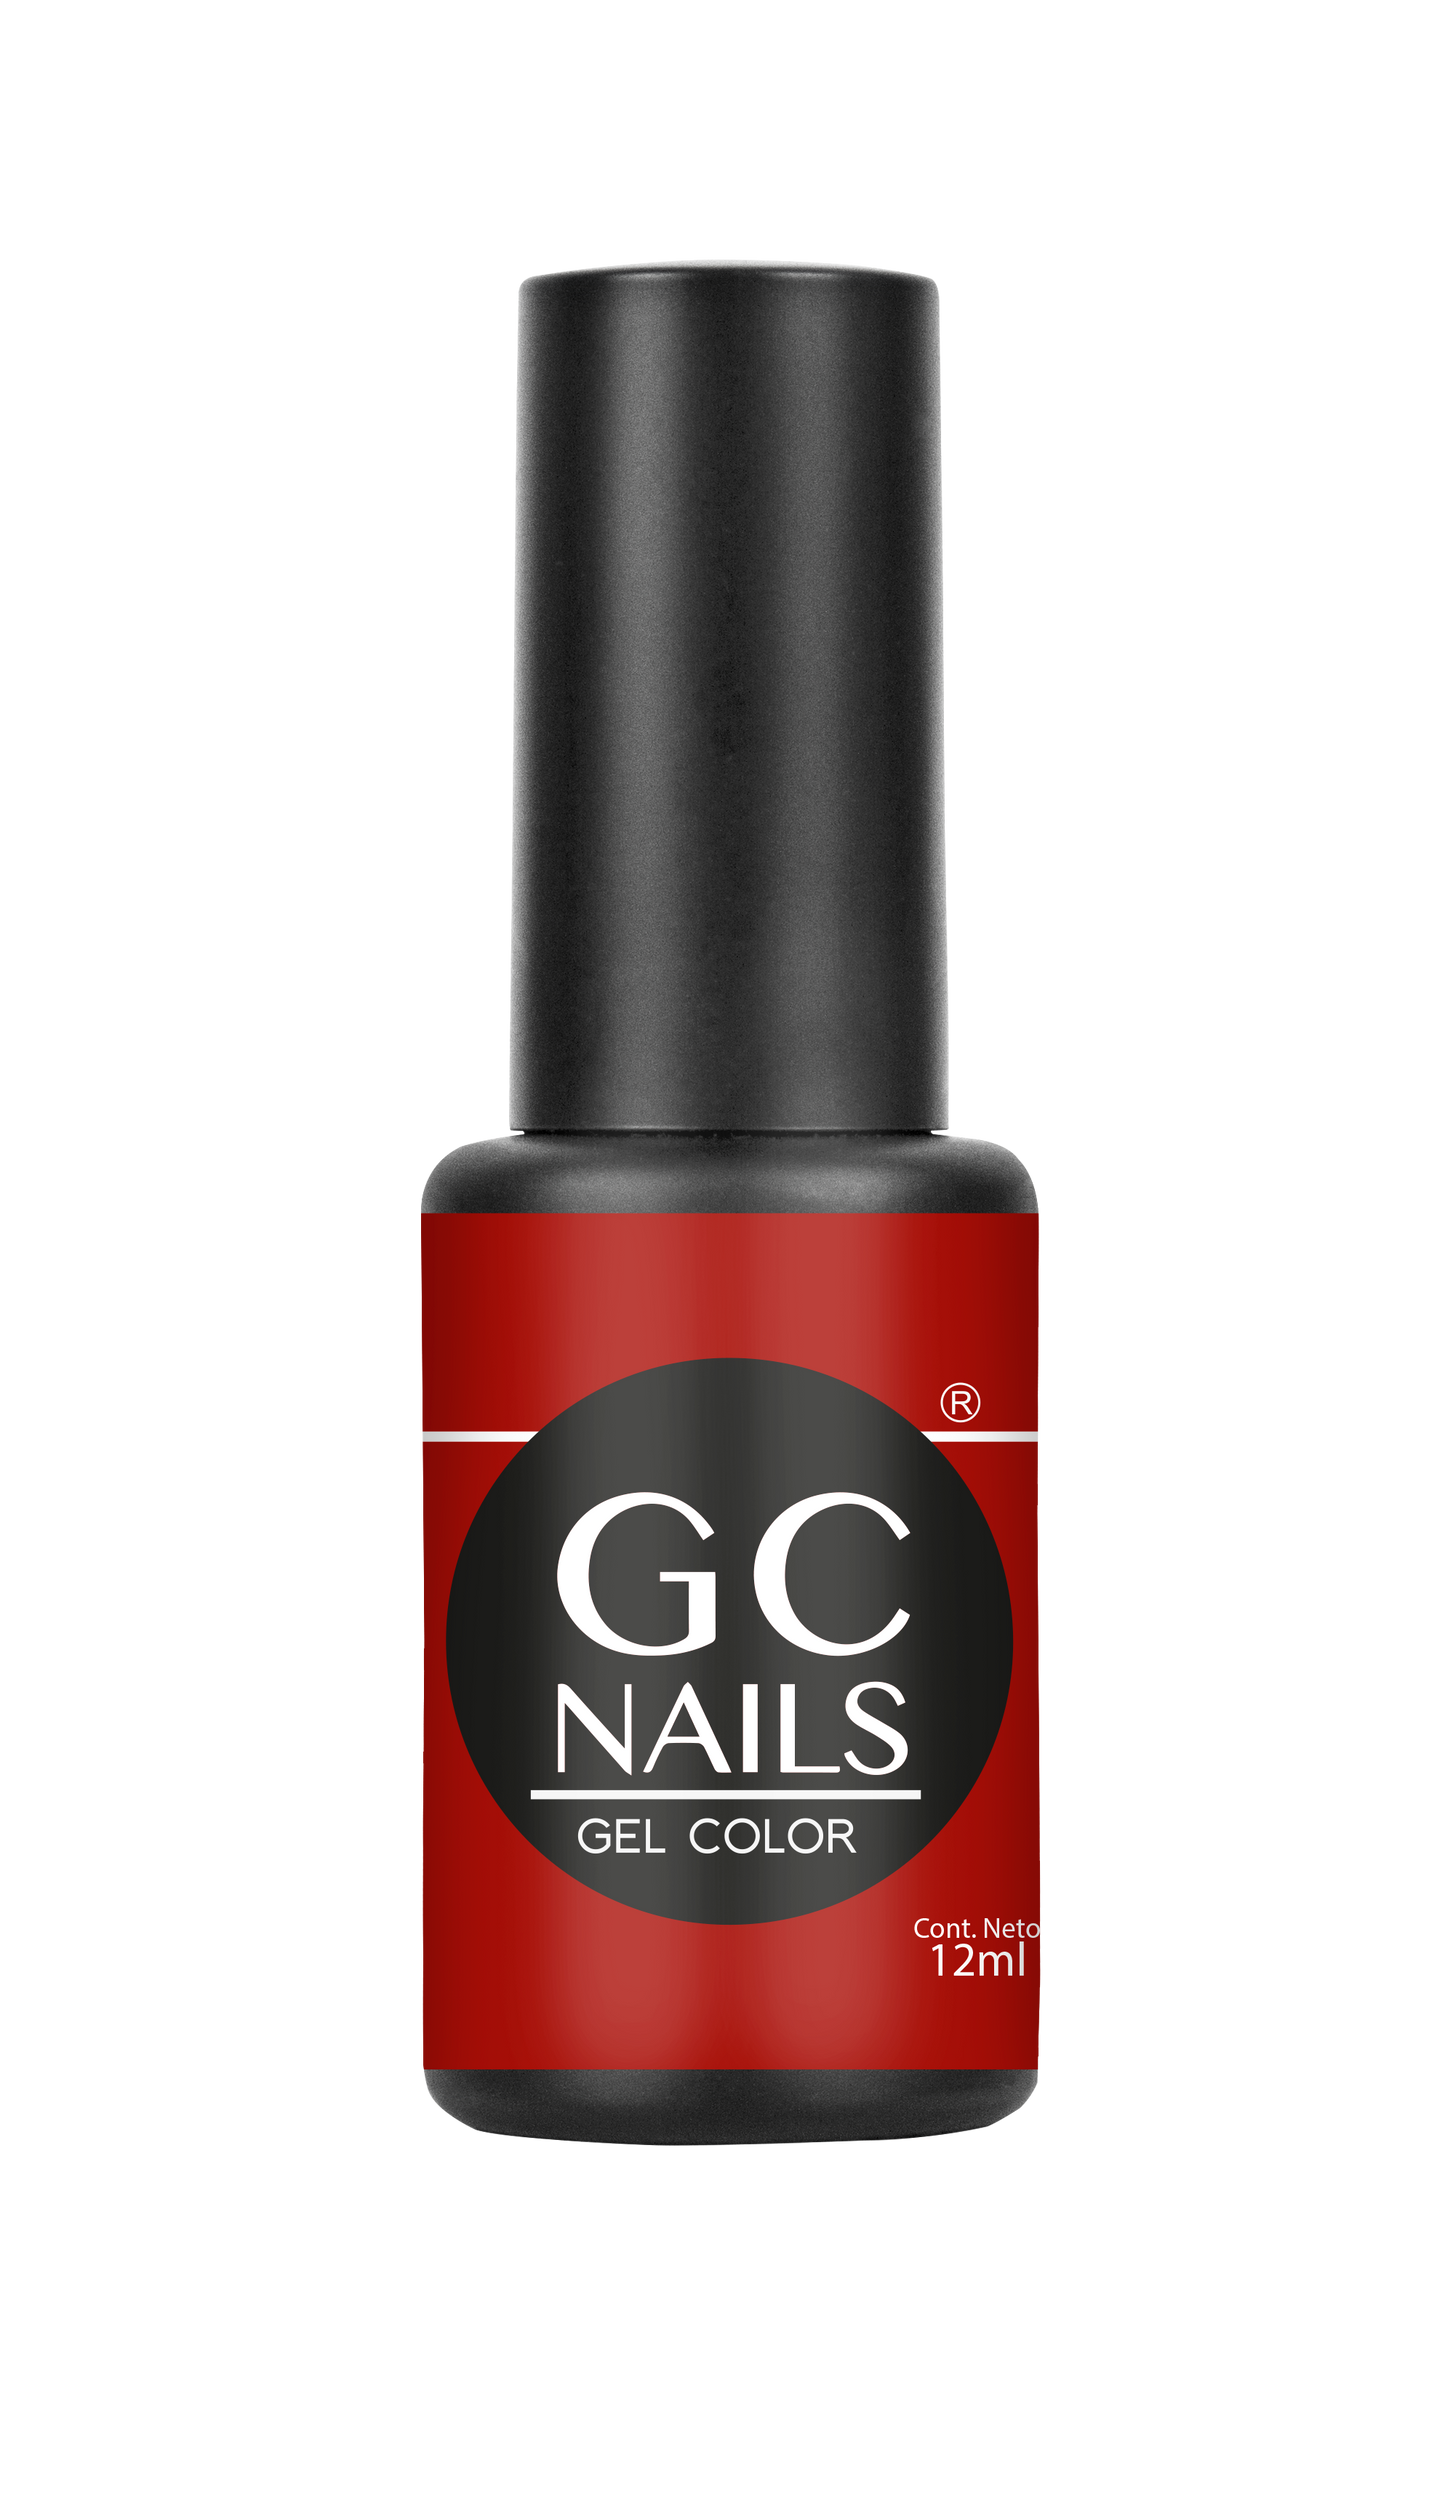 GC nails bel-color 12ml CARMIN 05